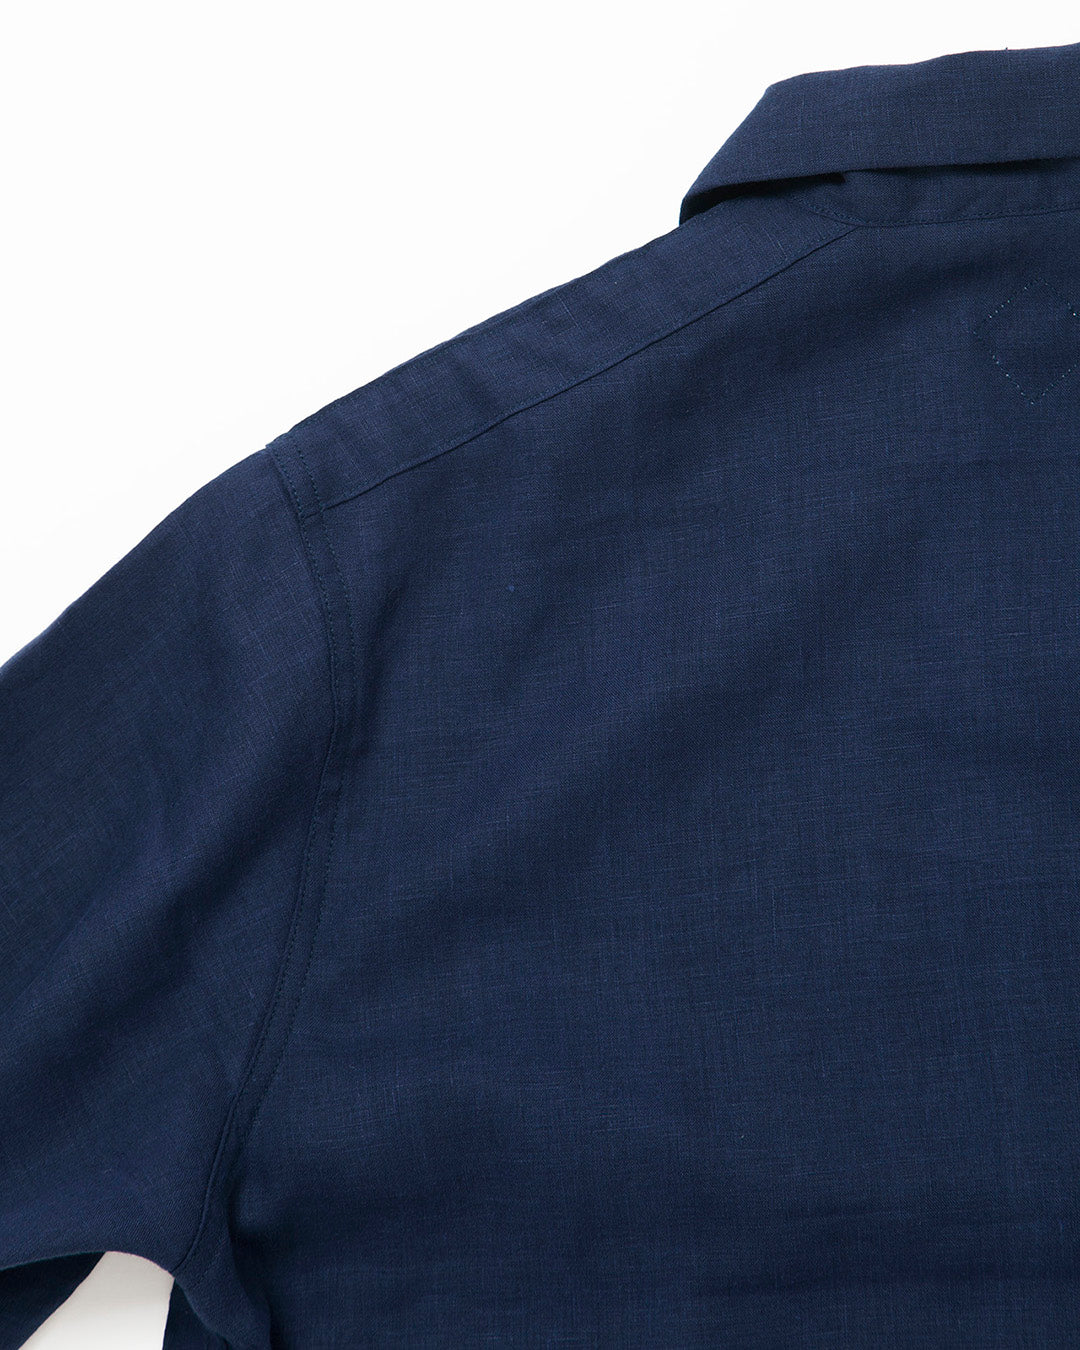 THE CORONA UTILITY - CS010・Utility Sailor Short Sleeve Jacket / Navy